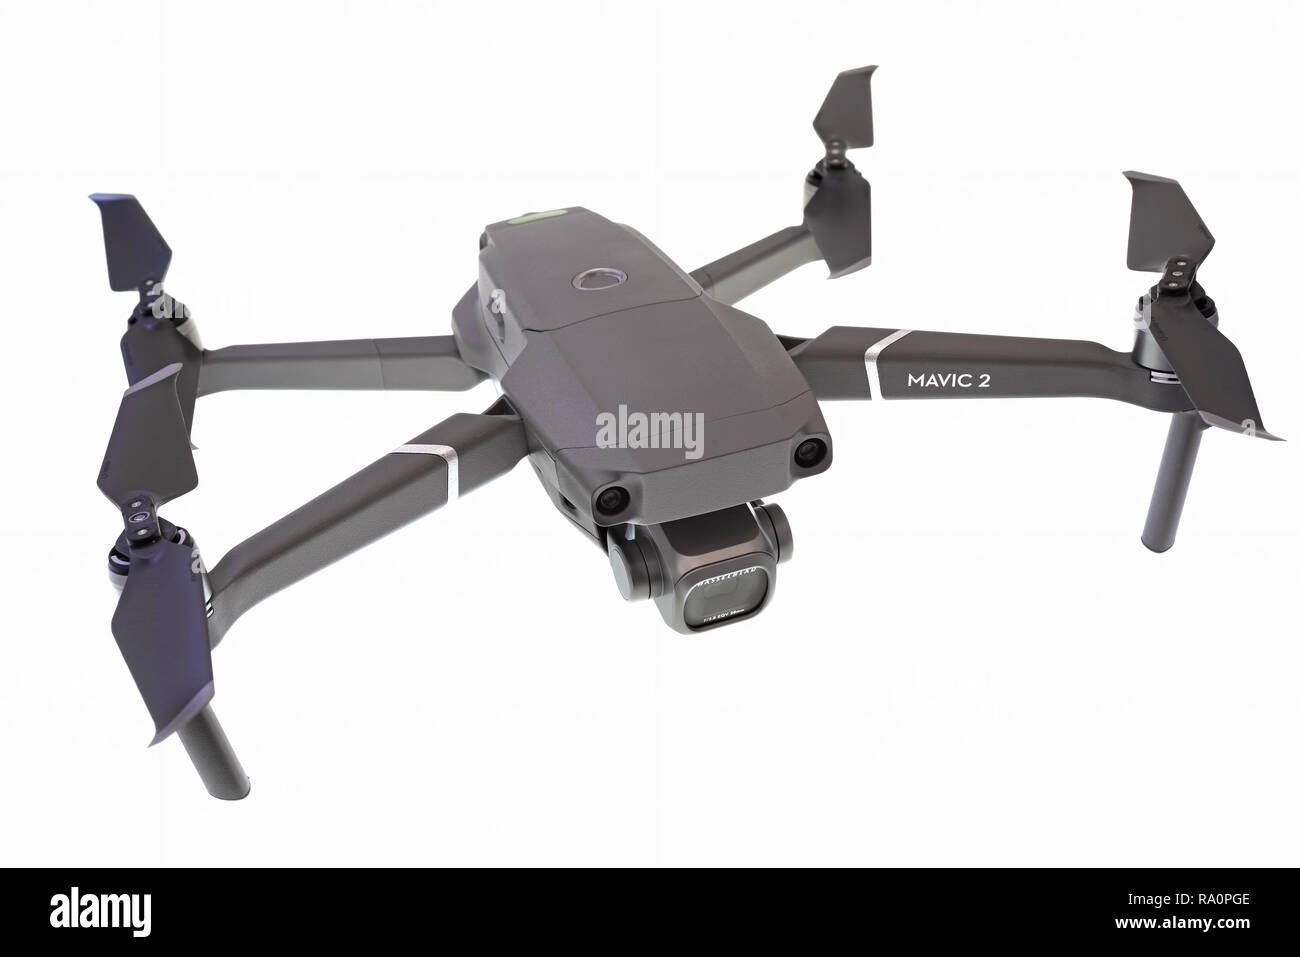 PIATRA Neamt, Roumanie - 12 octobre 2018 : 2 Mavic Pro drone avec appareil photo Hasselblad over white Banque D'Images